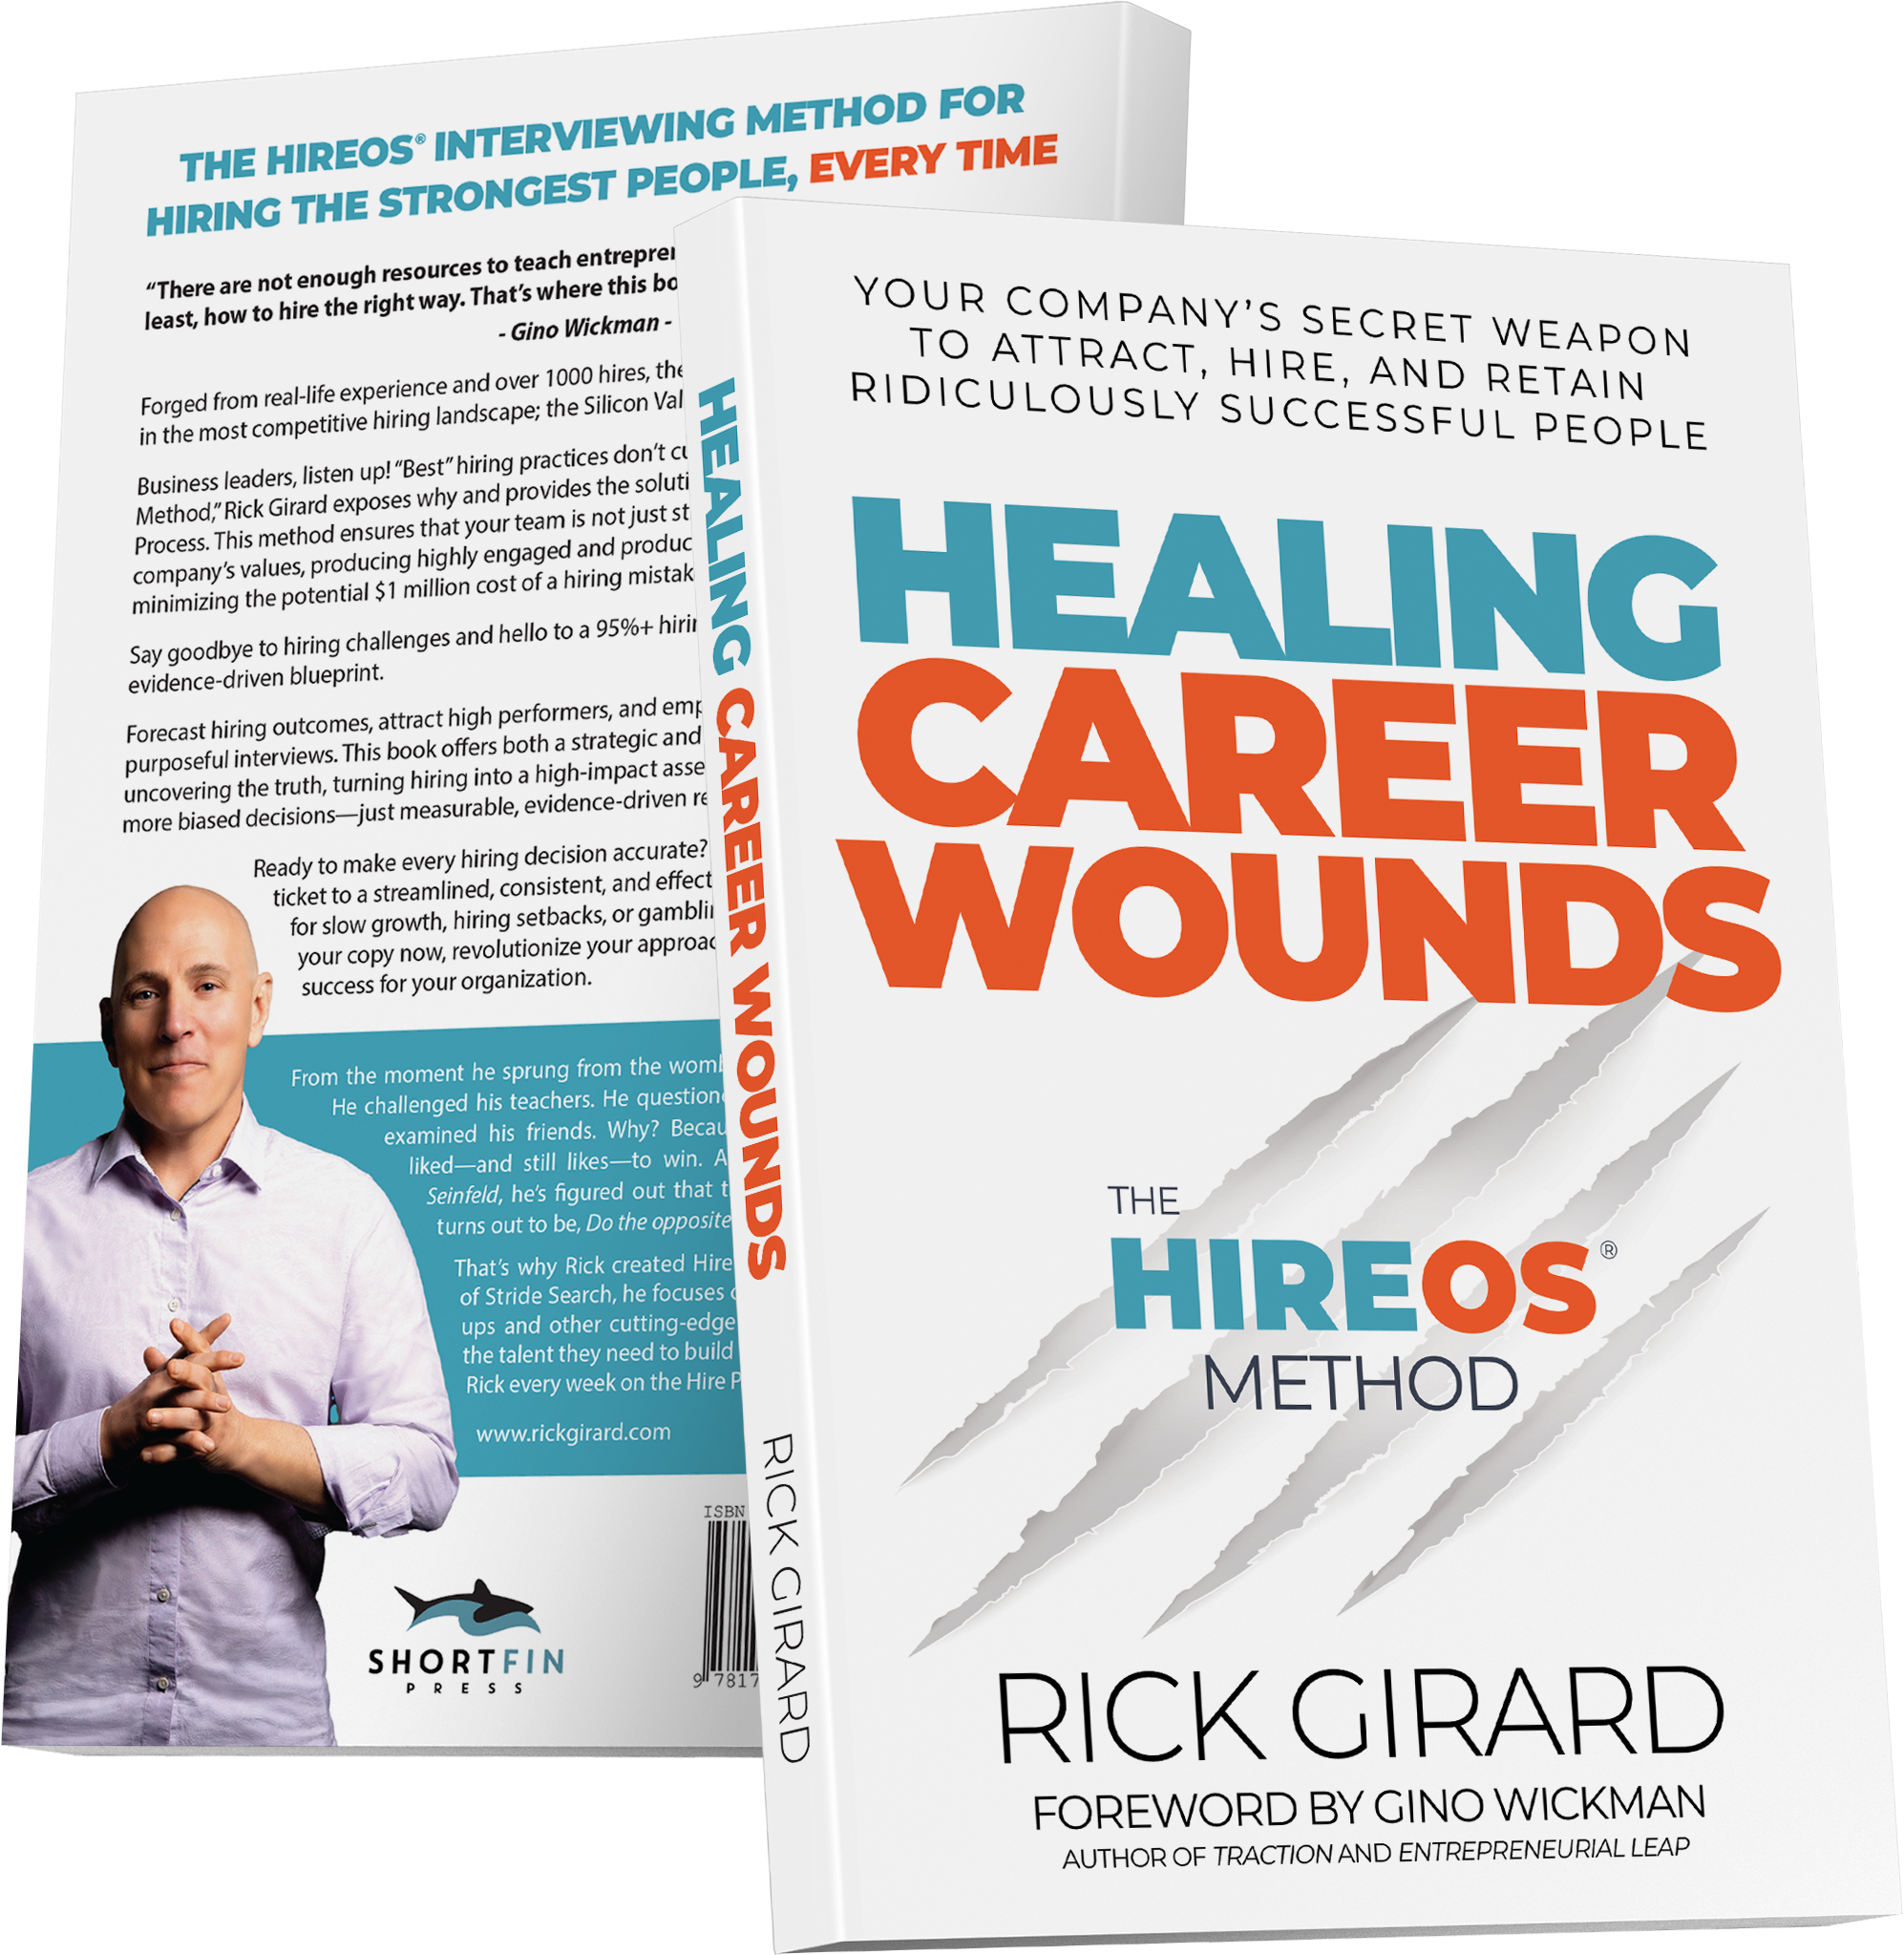 Intertru Book - Healing Career Wounds - Rick Girard